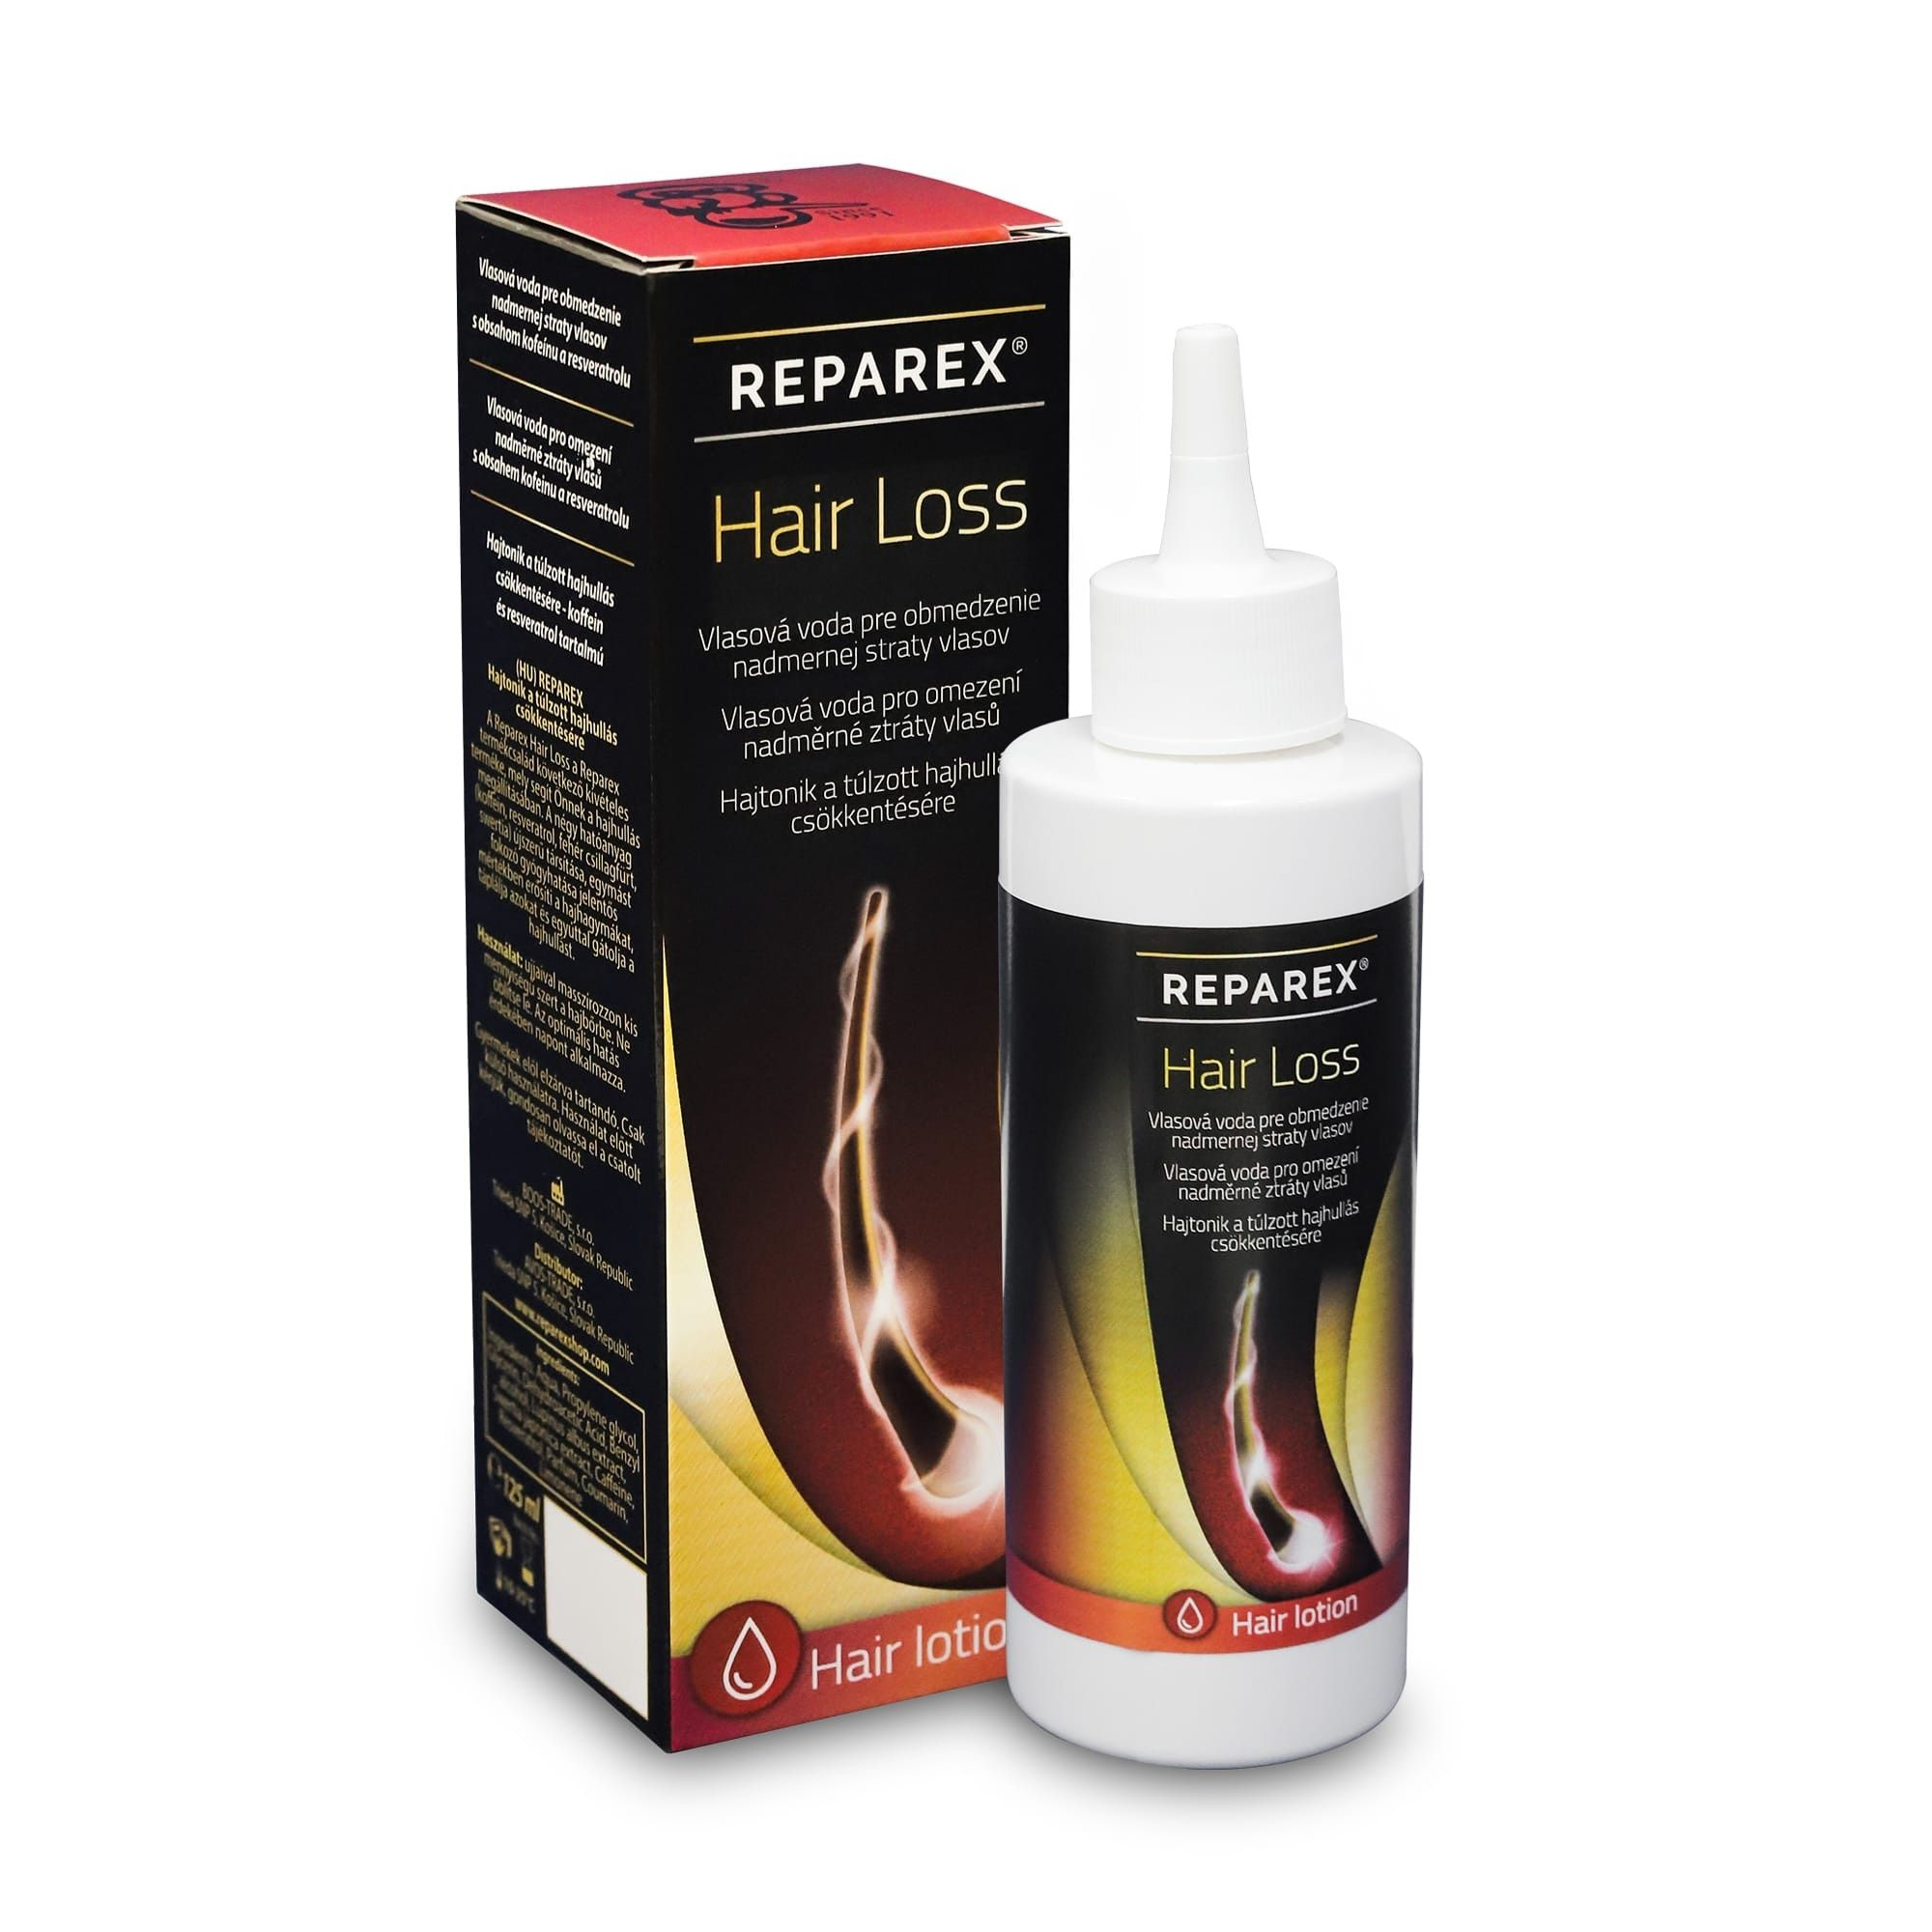 Reparex Hair Loss vlasová voda 125 ml Reparex